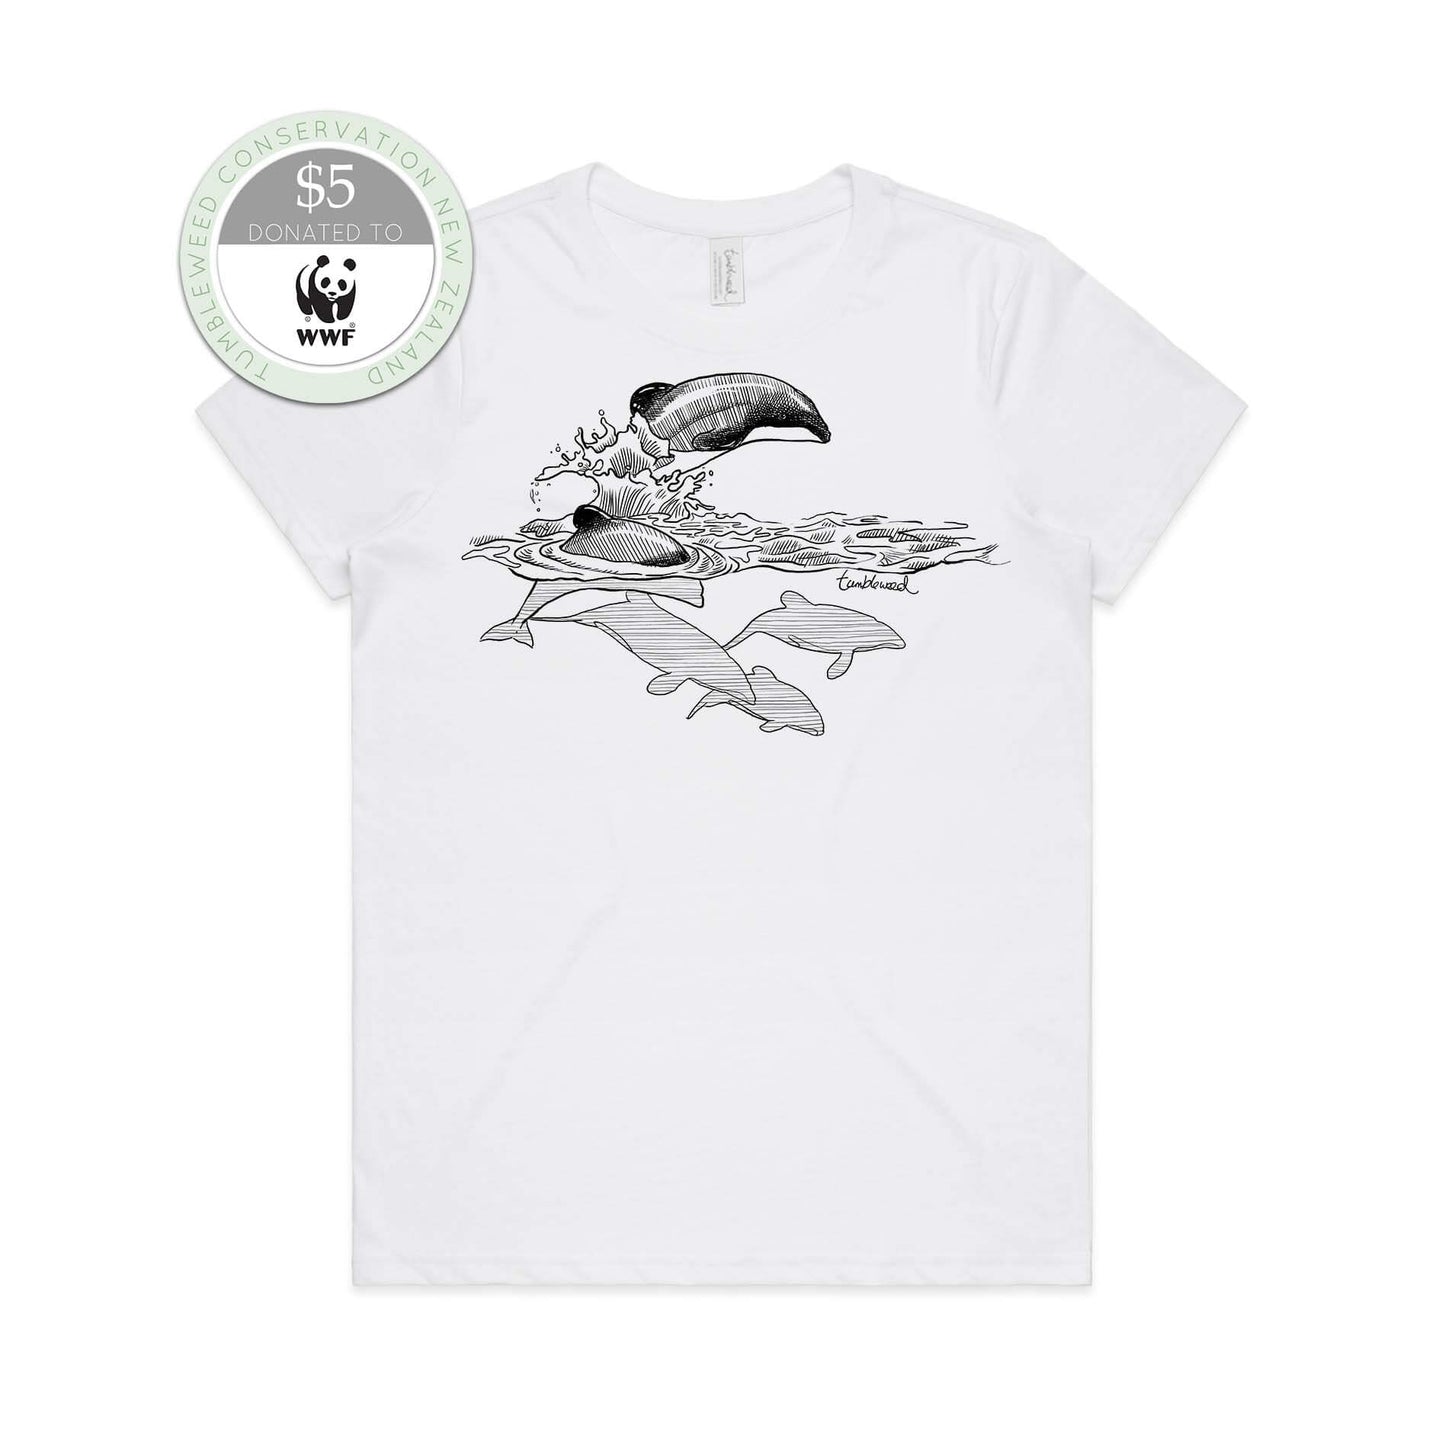 White, female t-shirt featuring a screen printed Māui dolphin design.